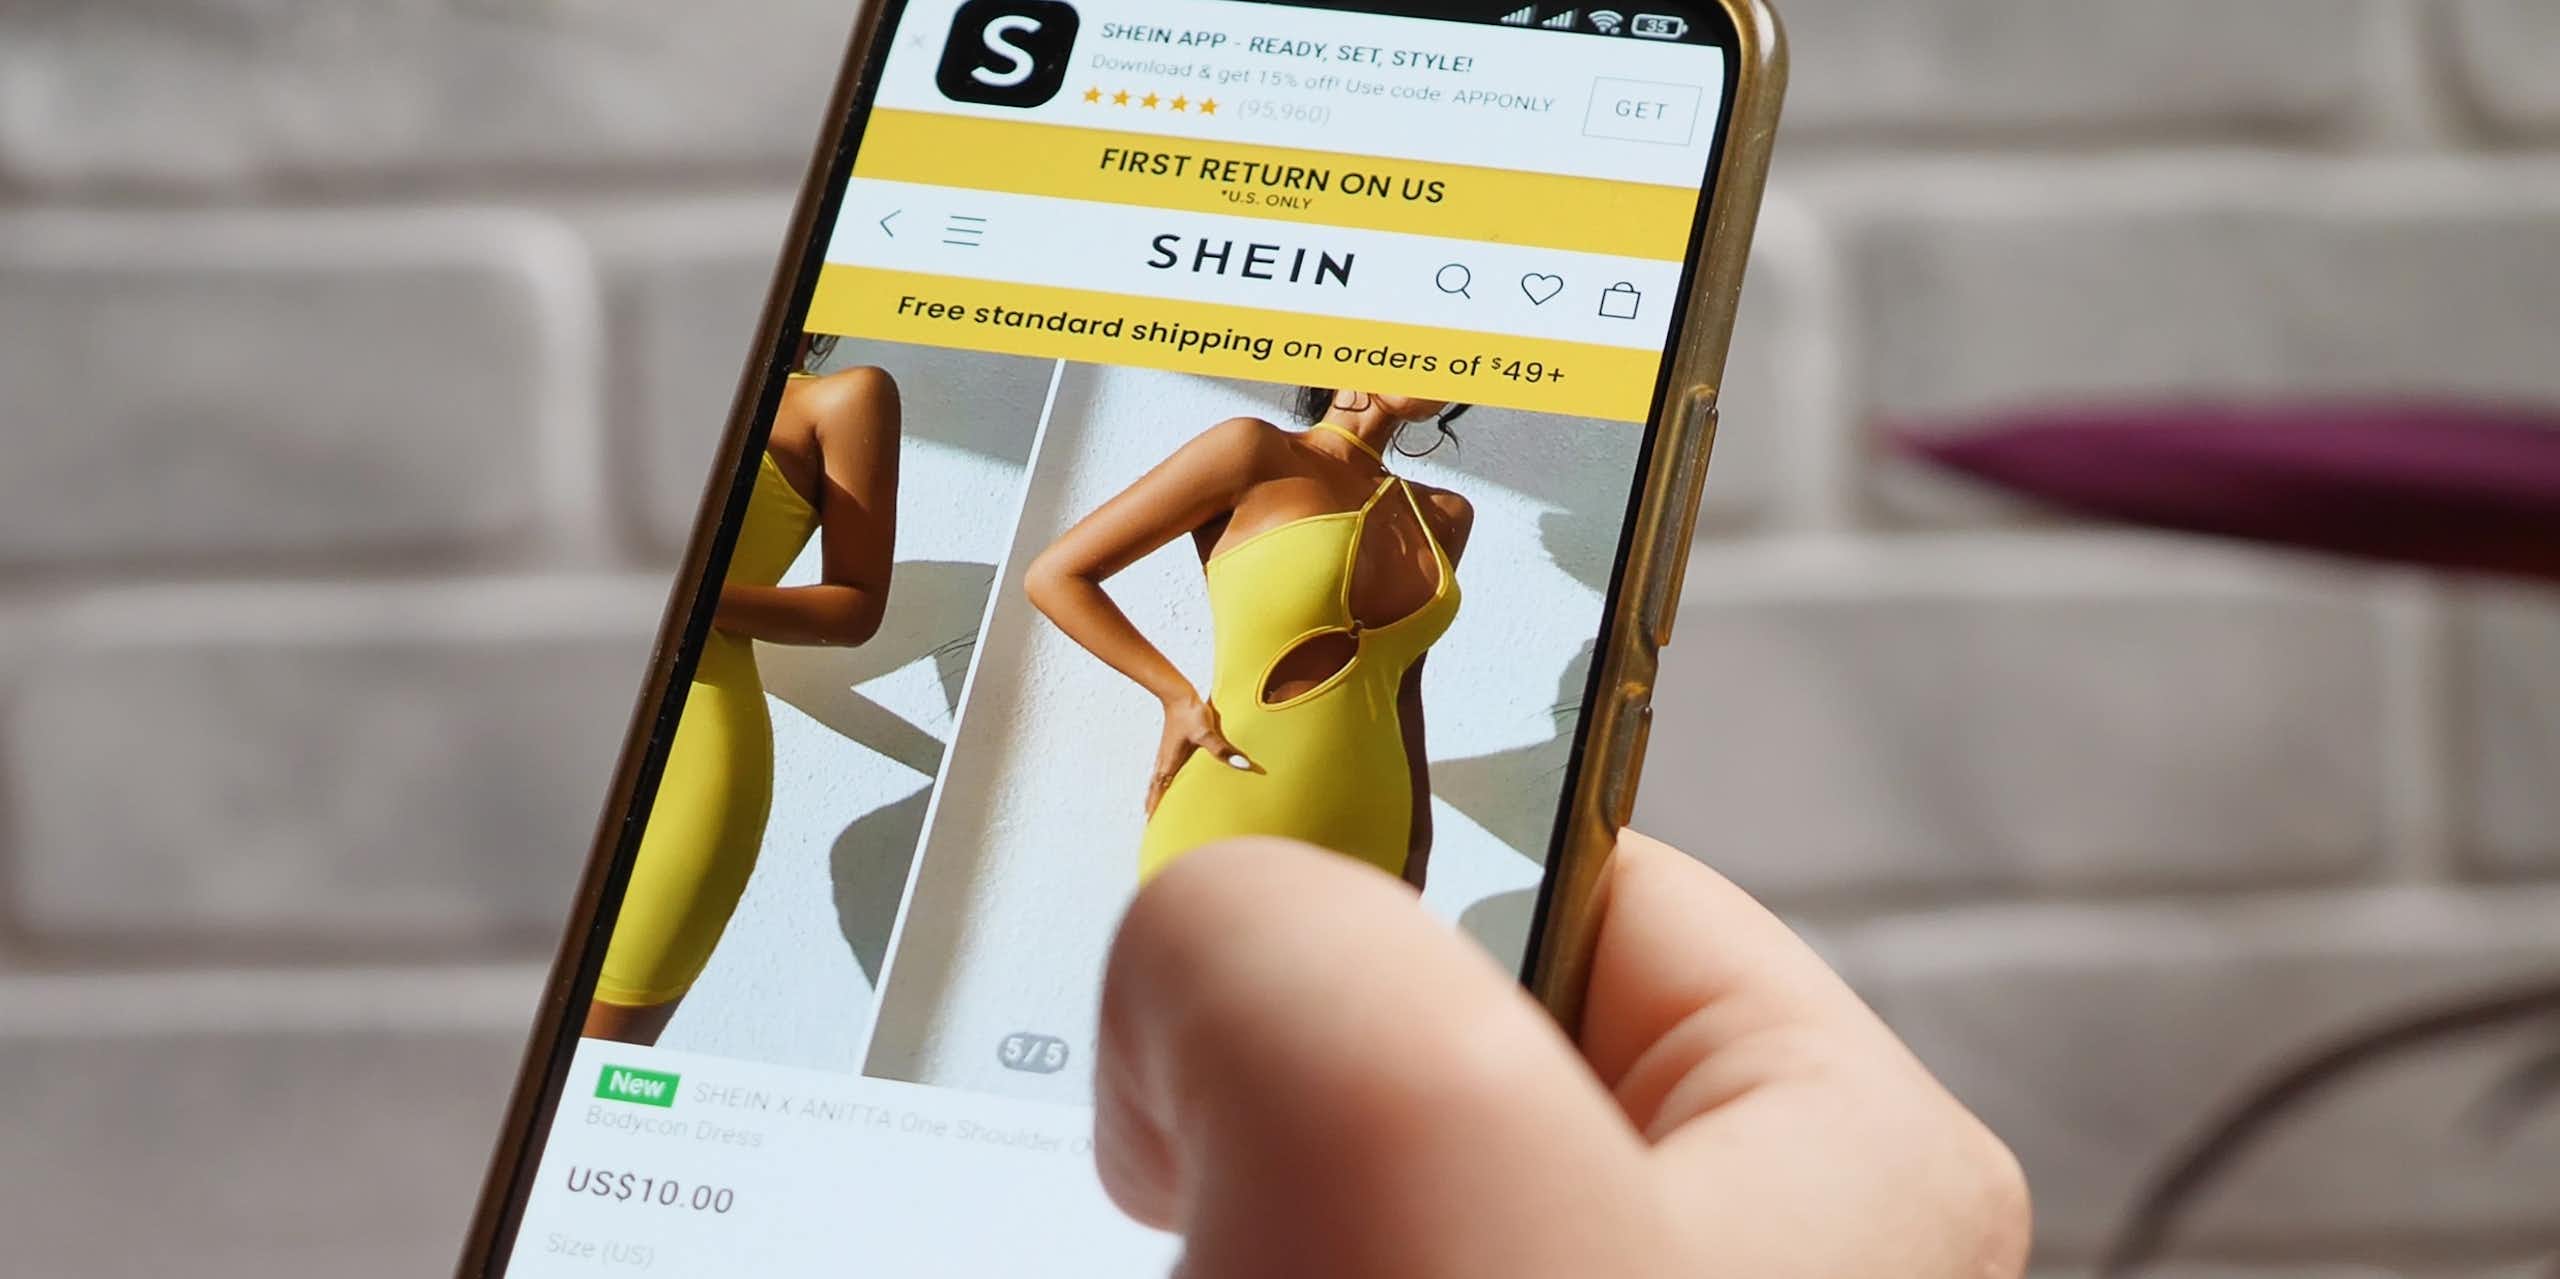 Dress for sale on Shein app